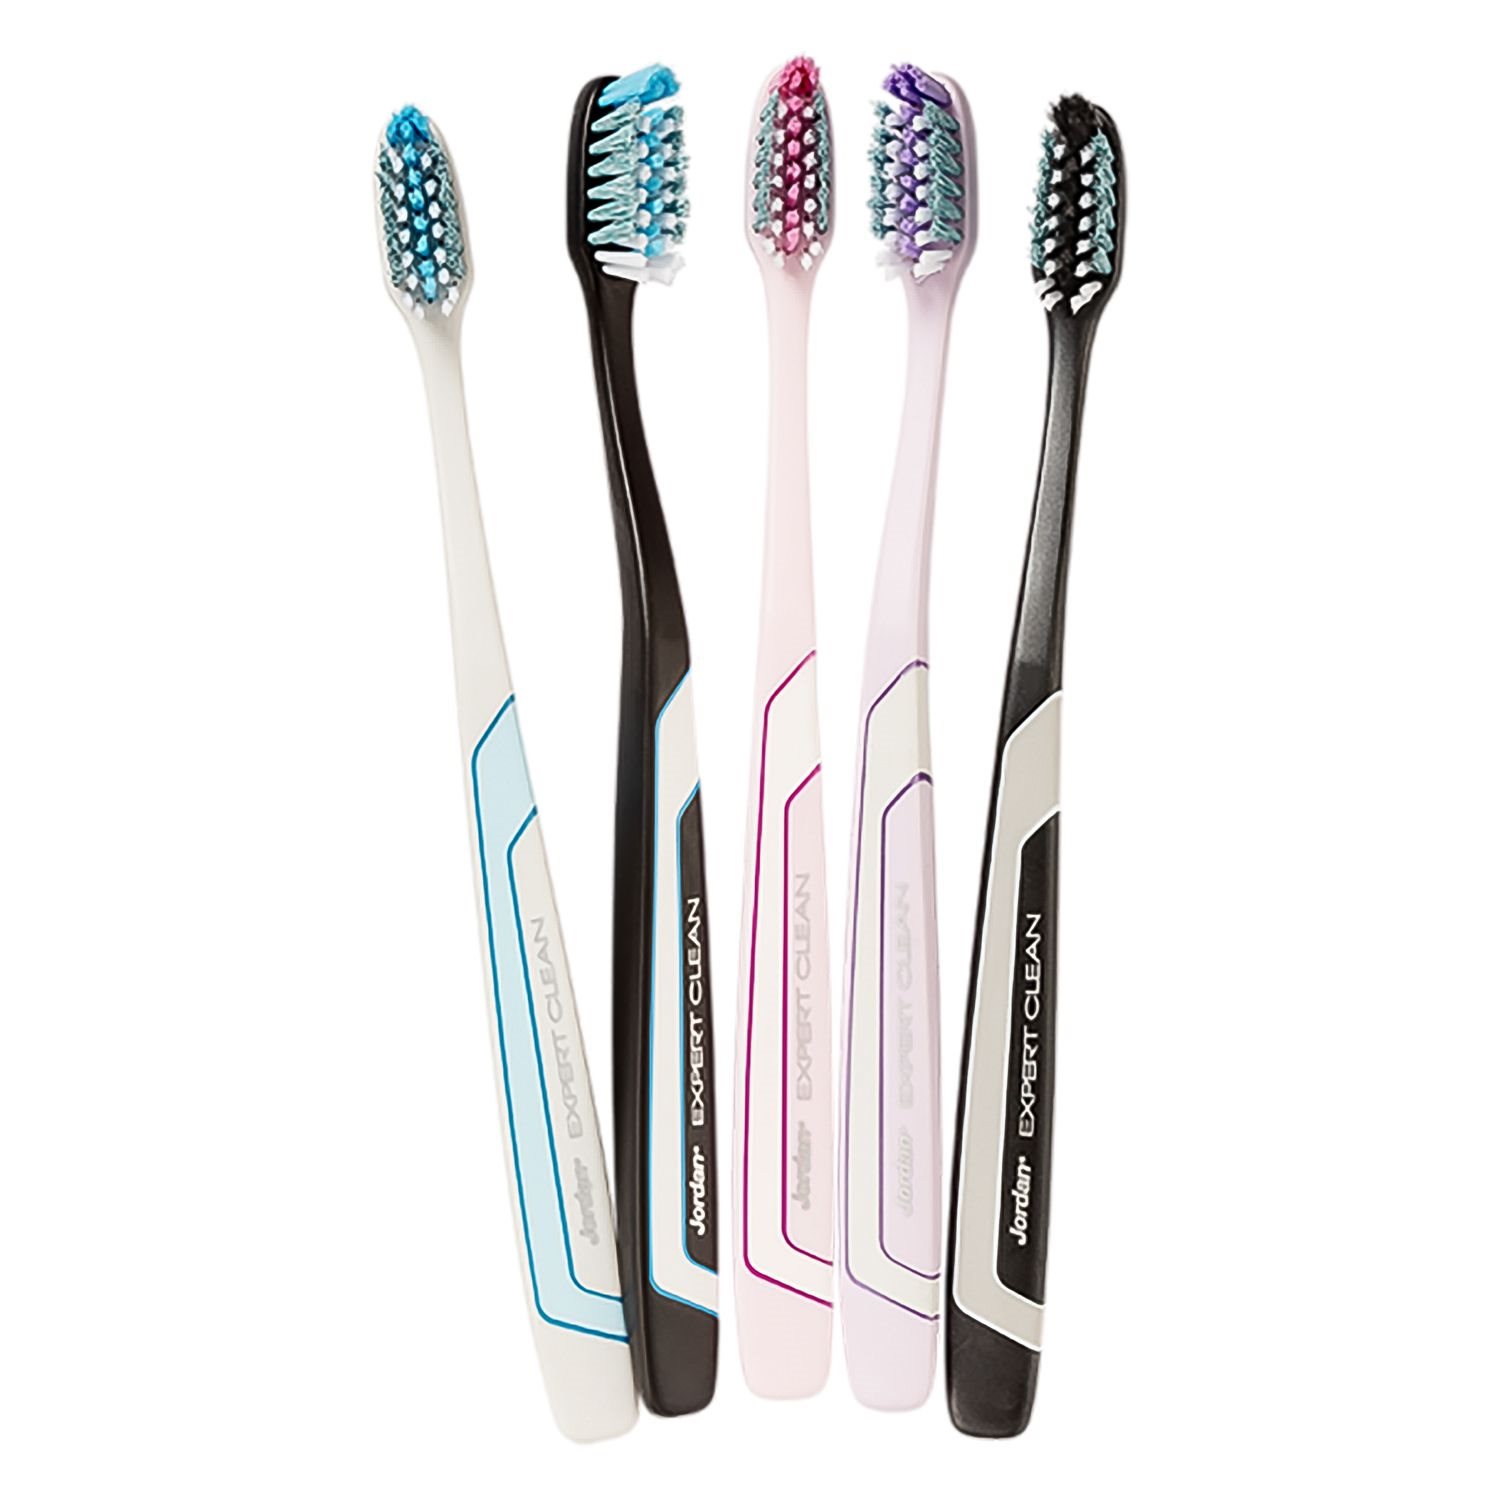 Зубна щітка Jordan Jordan Expert Clean (середня) - купить в интернет-магазине Юнимед